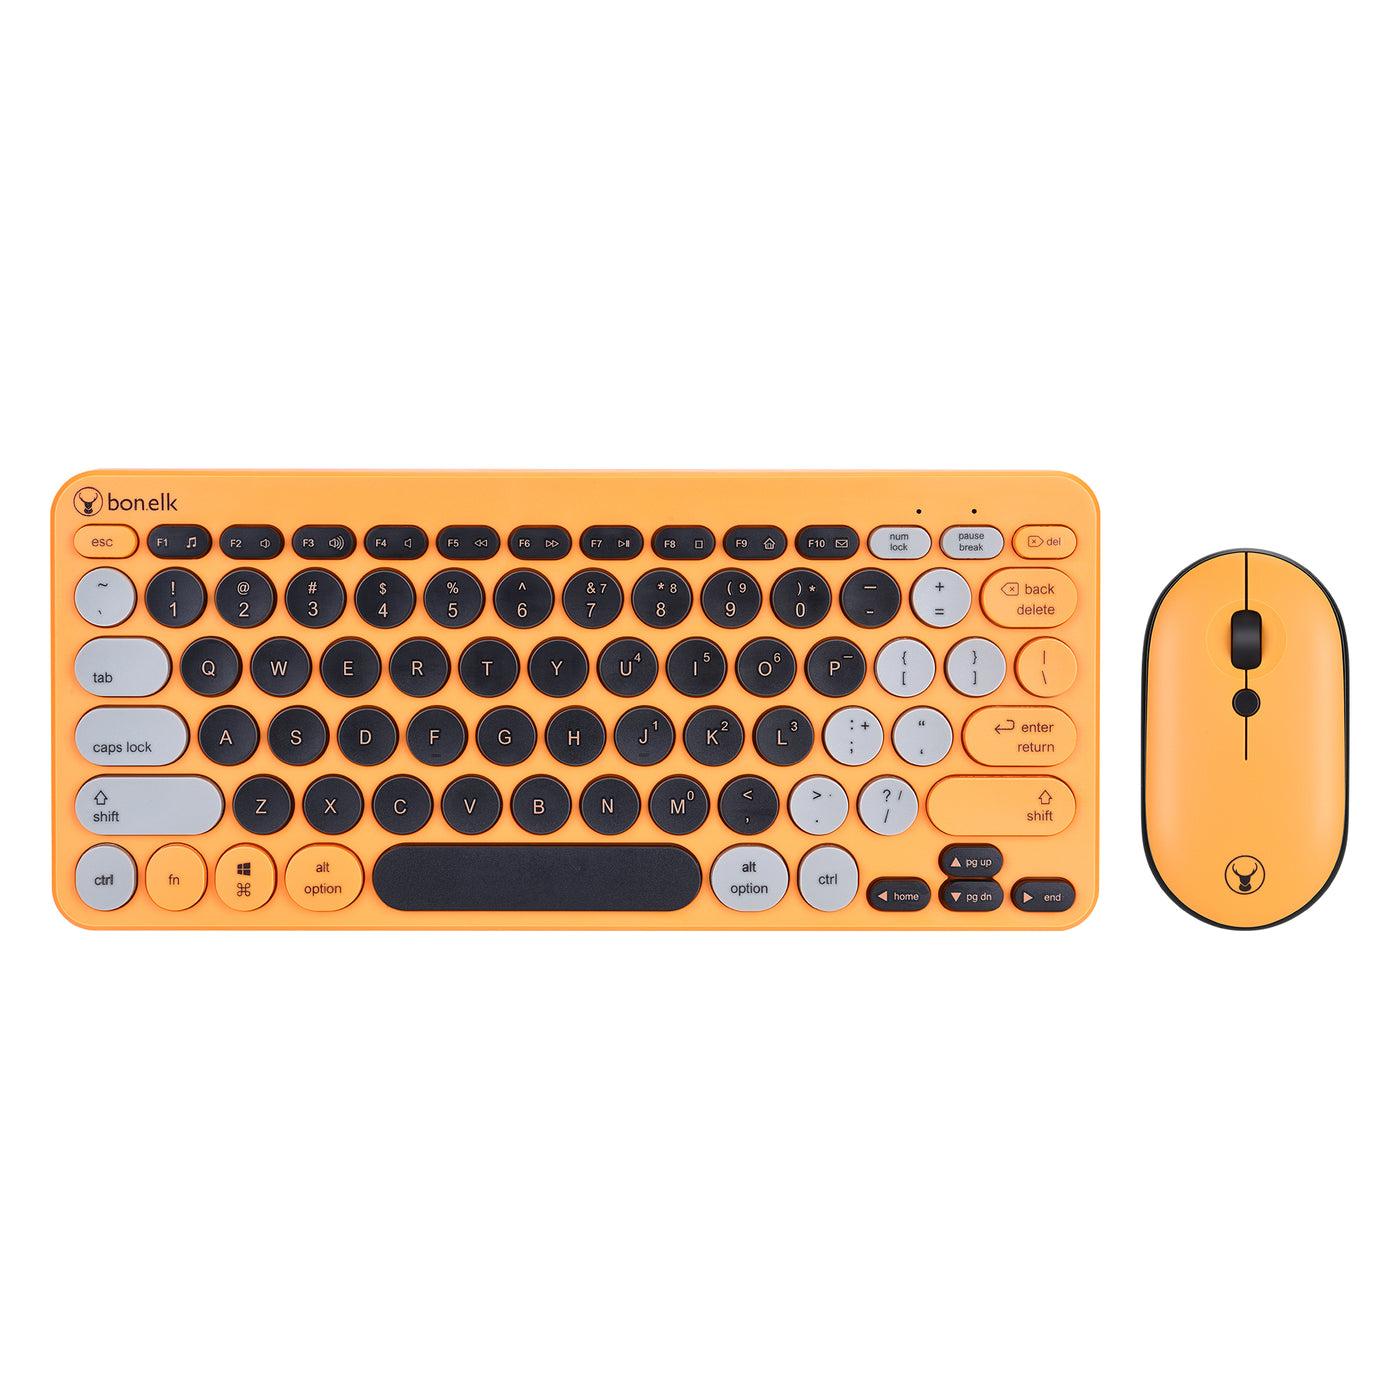 Bonelk Wireless Keyboard and Mouse Combo, Compact, KM-383 - Orange